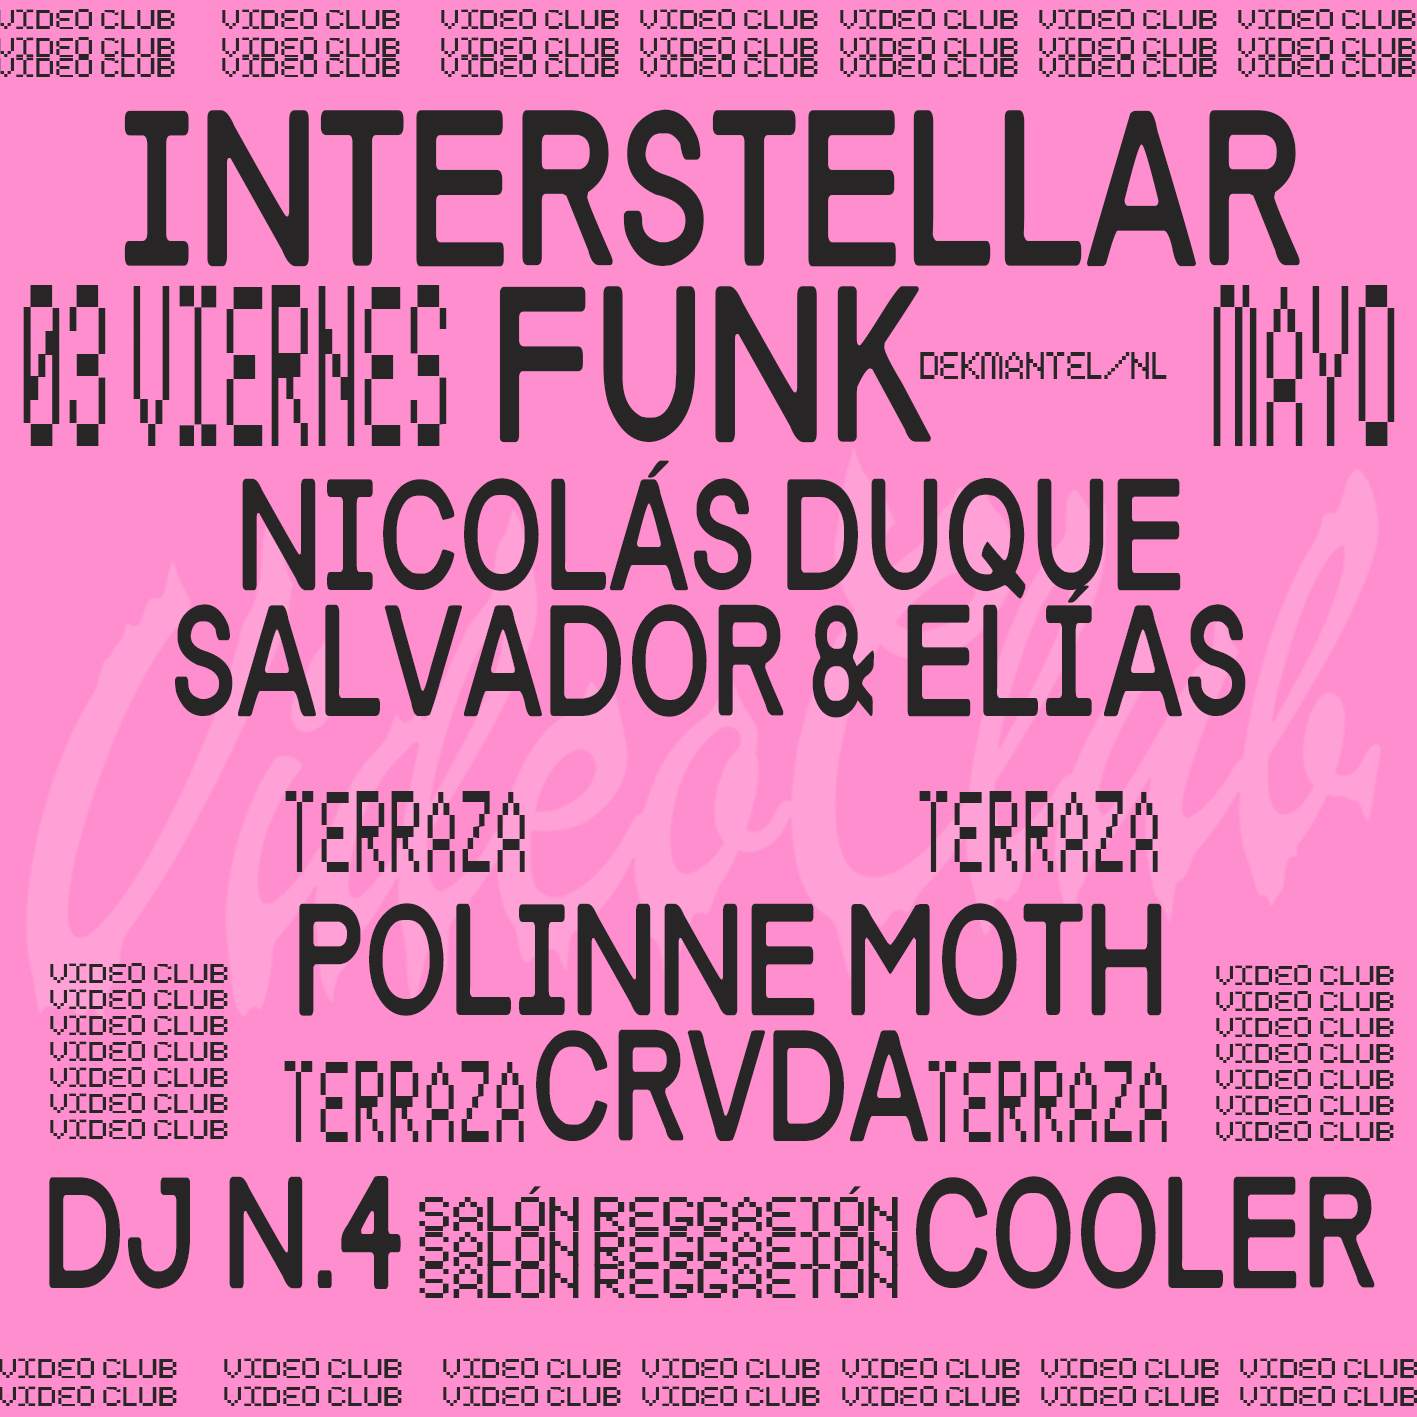 Video Club presenta: Interstellar Funk (Dekmantel / NL) - Página frontal